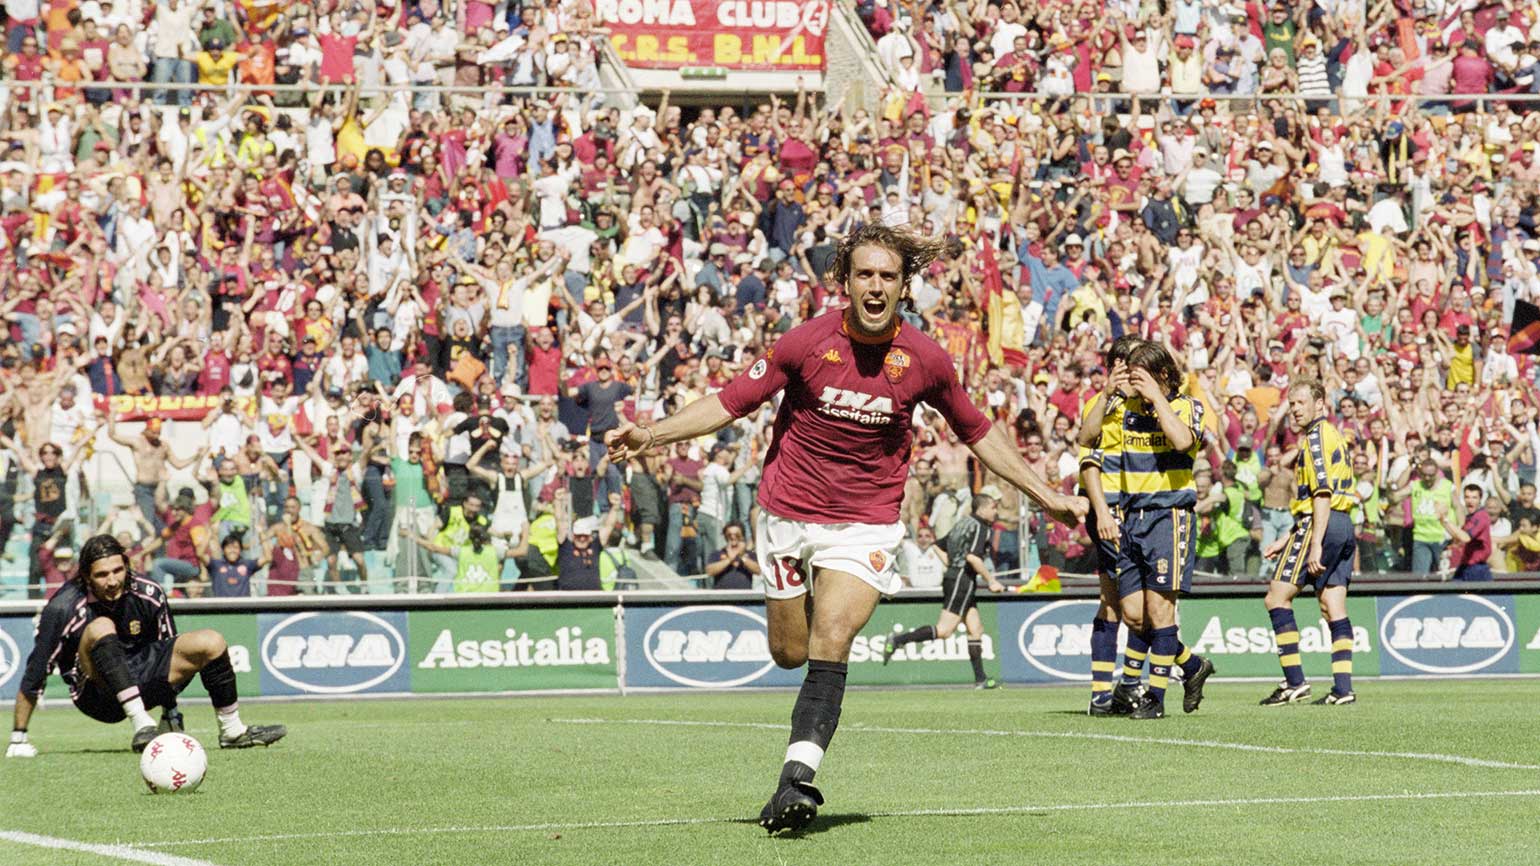 Happy birthday to the great Gabriel Batistuta - who scored 20 goals in our Scudetto-winning 2000-01 campaign!   